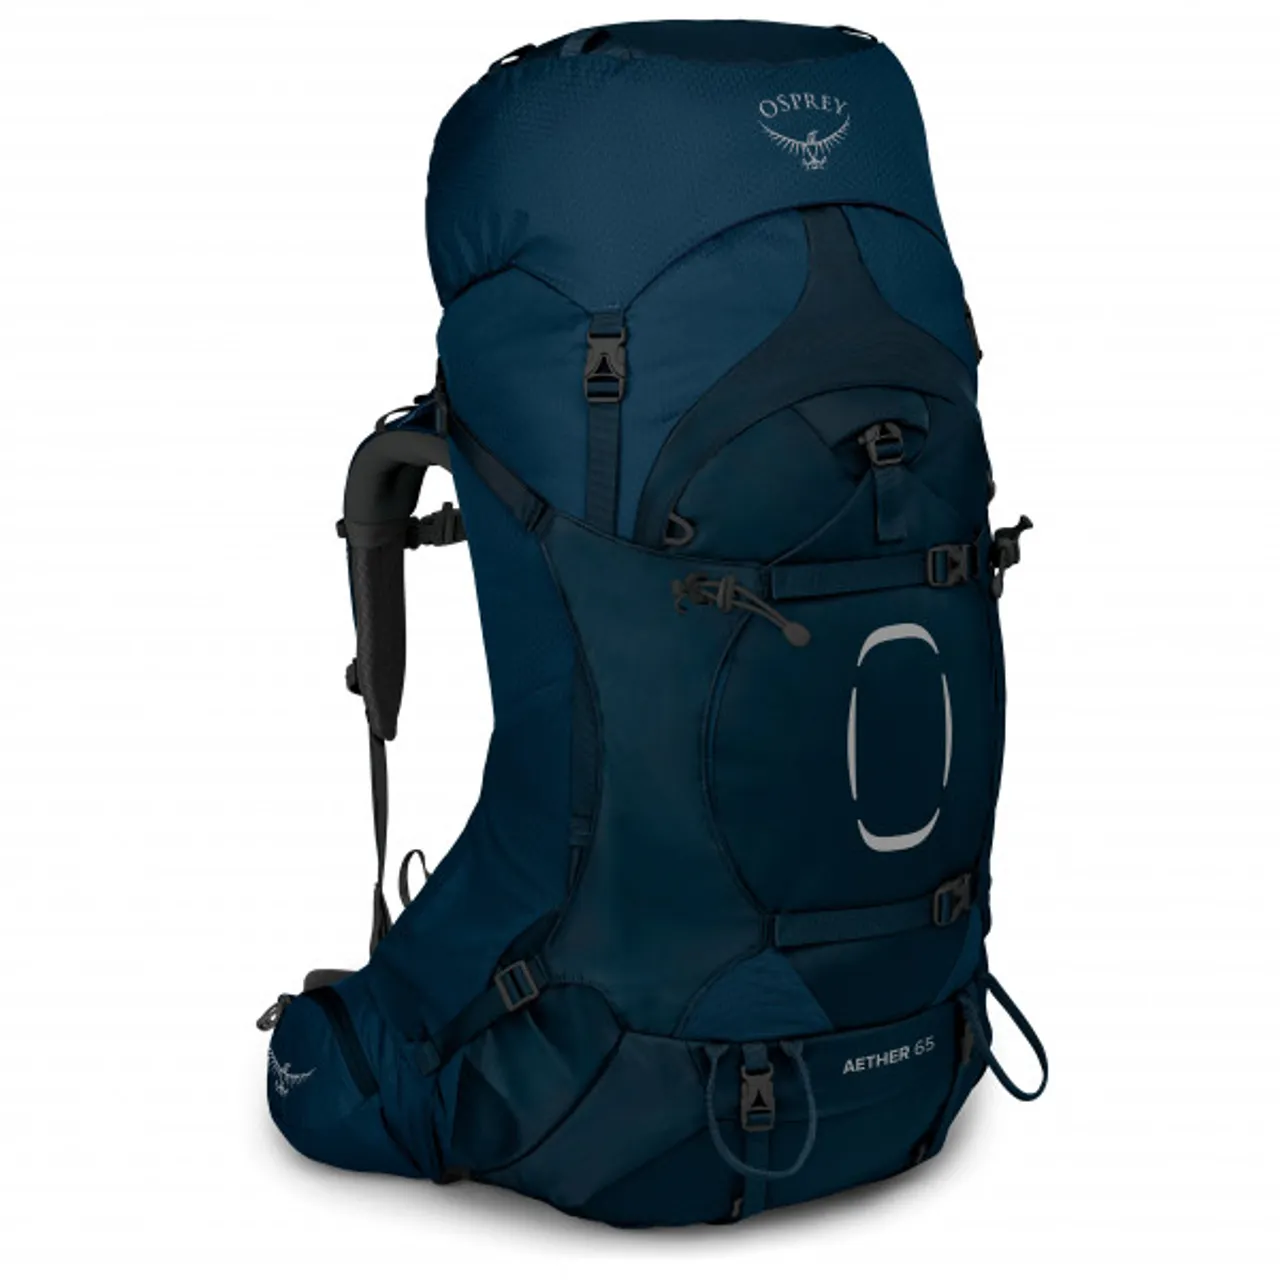 Osprey - Aether 65 - Walking backpack size 65 l - S/M, blue